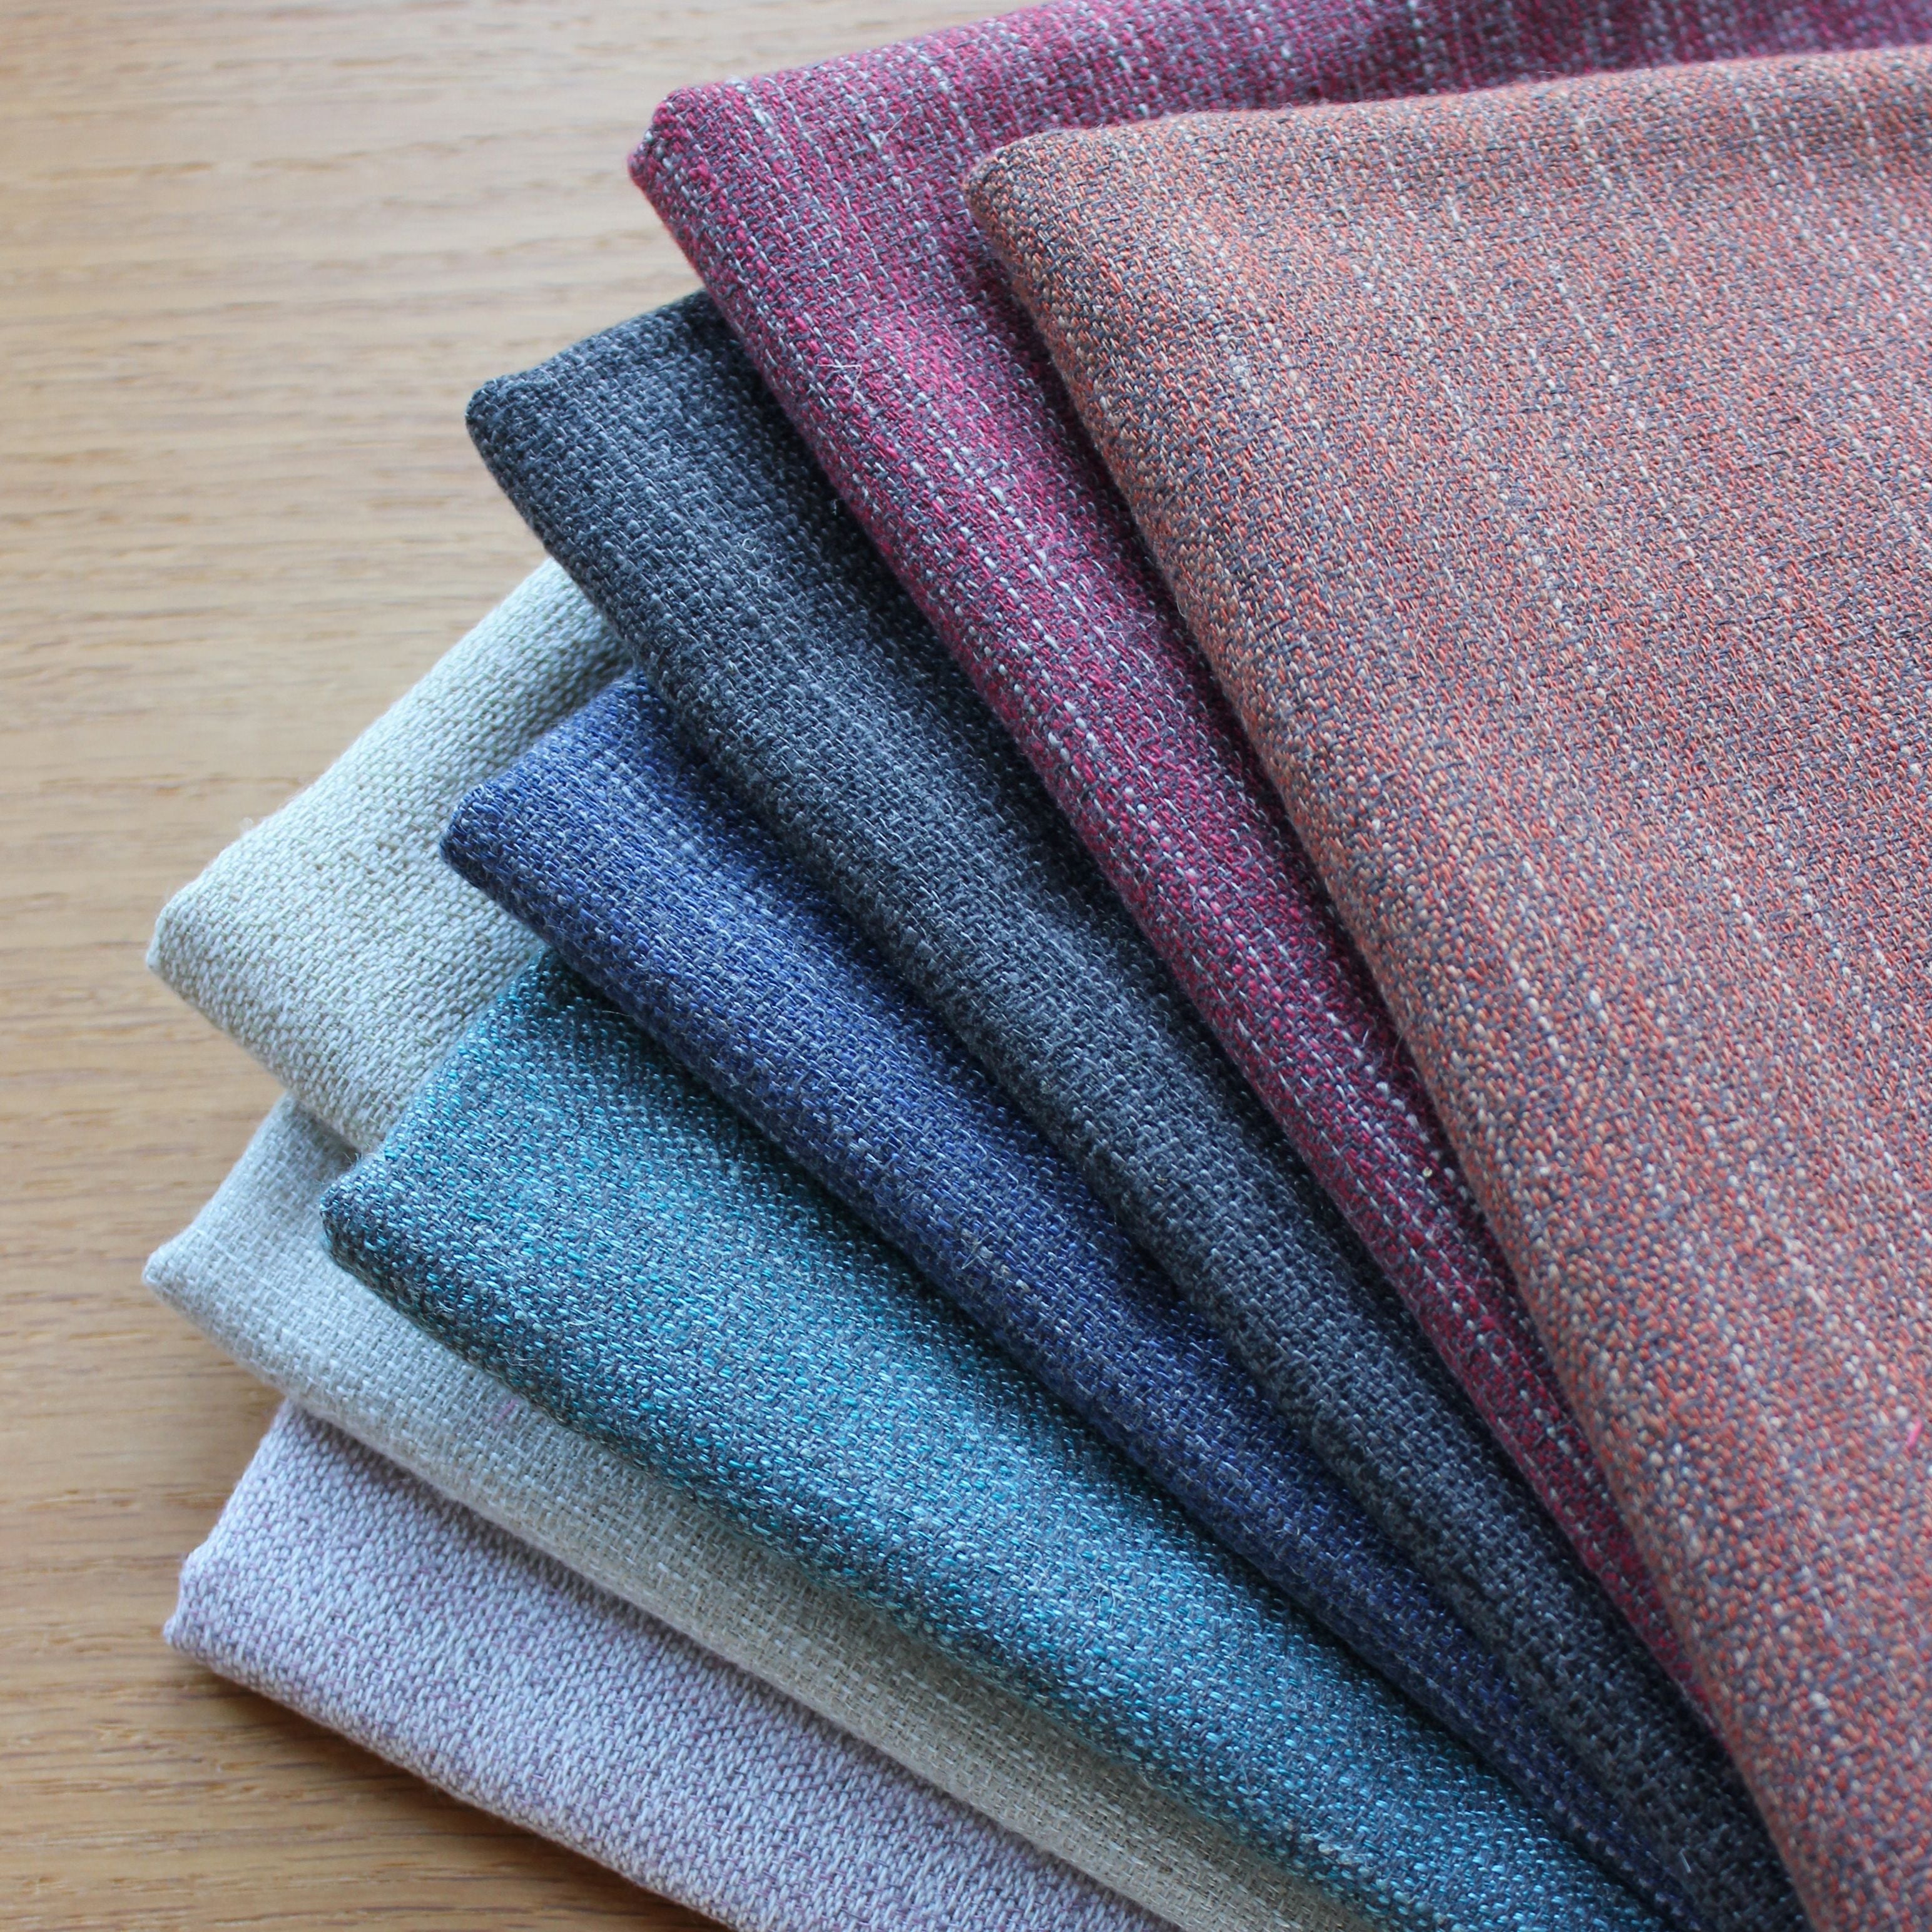 McAlister Textiles Hamleton Rustic Linen Blend Teal Plain Fabric Fabrics 